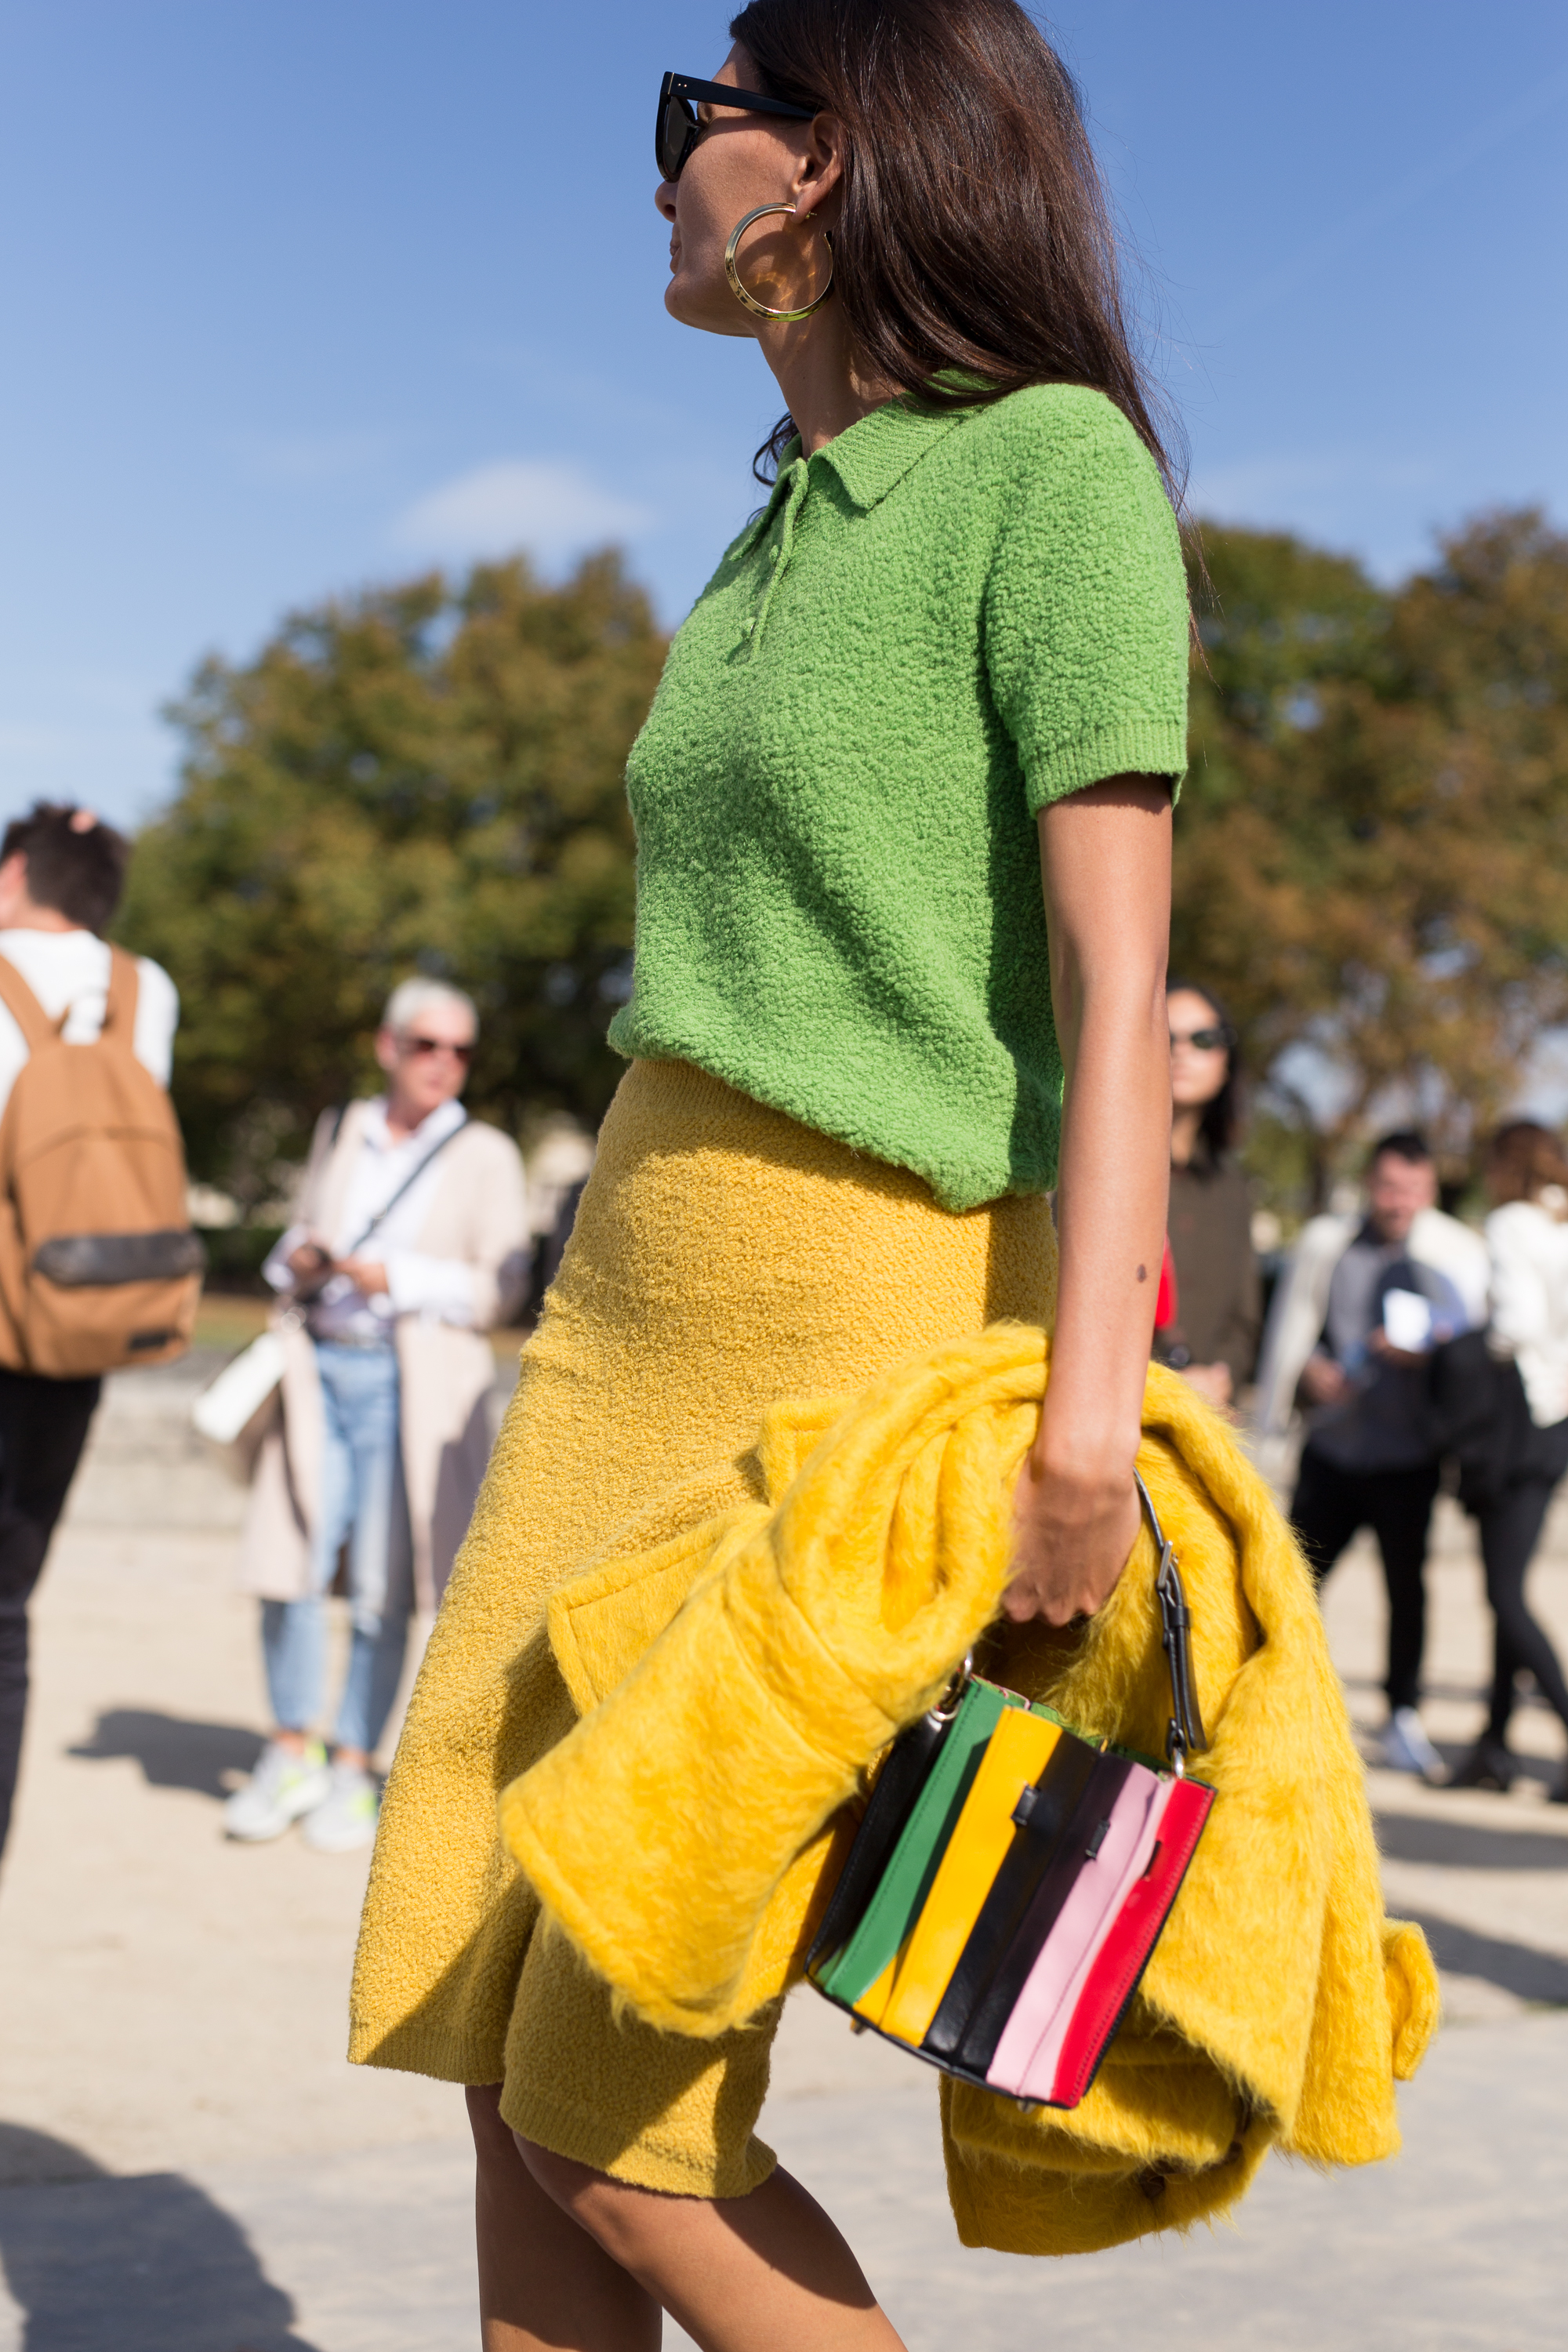 PARIS, FRANCE - SEPTEMBER 29: Giovanna Battaglia Engelbert is seen attending Nina Ricci during Paris Fashion week wearing Nina Ricci on September 29, 2017 in Paris, France. (Photo by Matthew Sperzel/Getty Images)